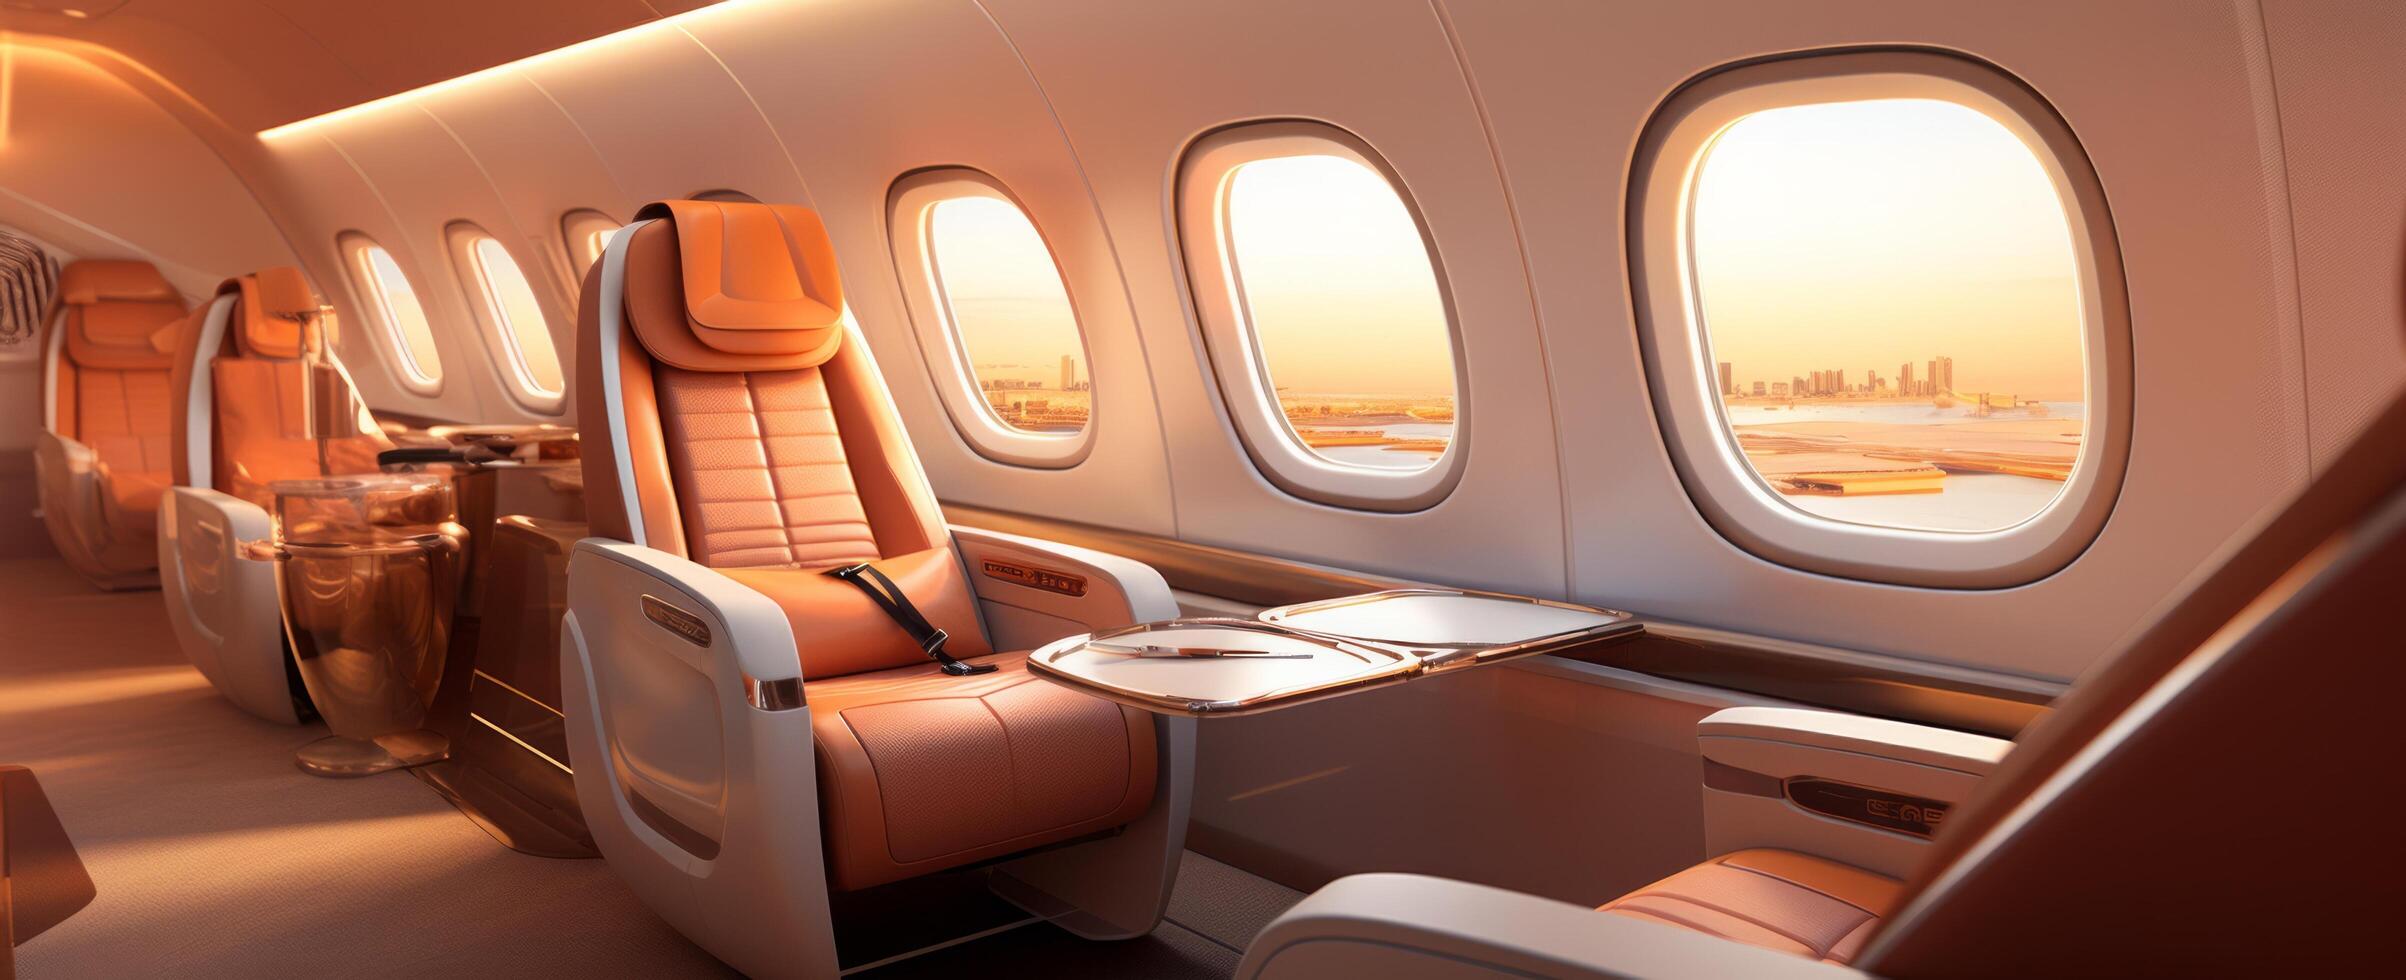 AI generated aircraft cabin interior designs photo